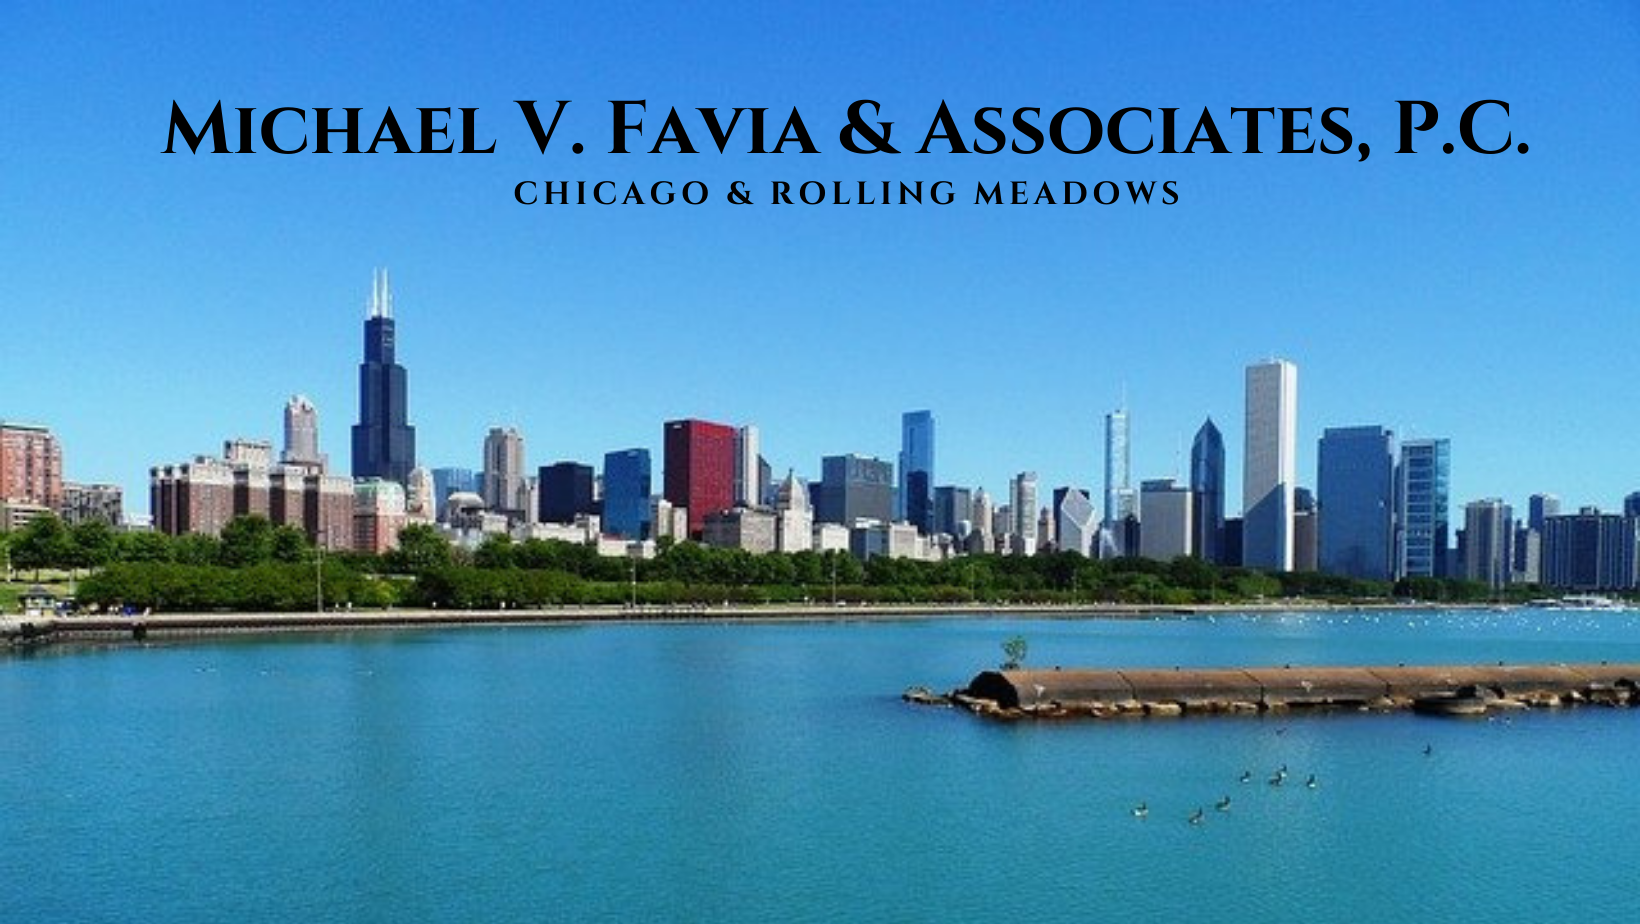 Michael V. Favia & Associates, P.C. law firm Chicago & Rolling meadows